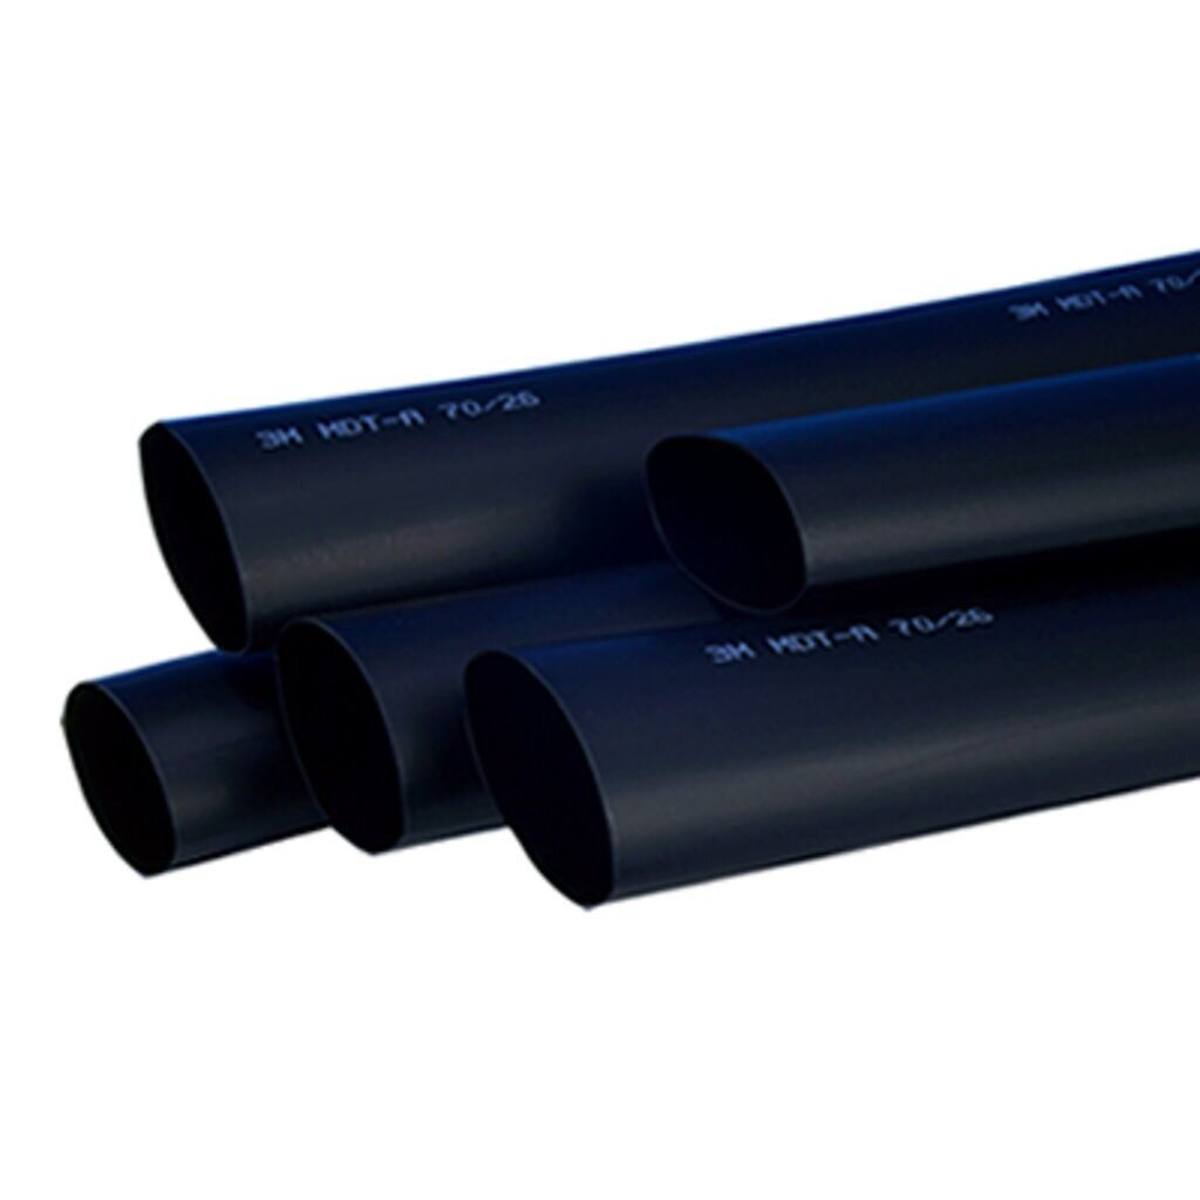 3M MDT-A Medium-wall heat-shrink tubing with adhesive, black, 38/12 mm, 1 m